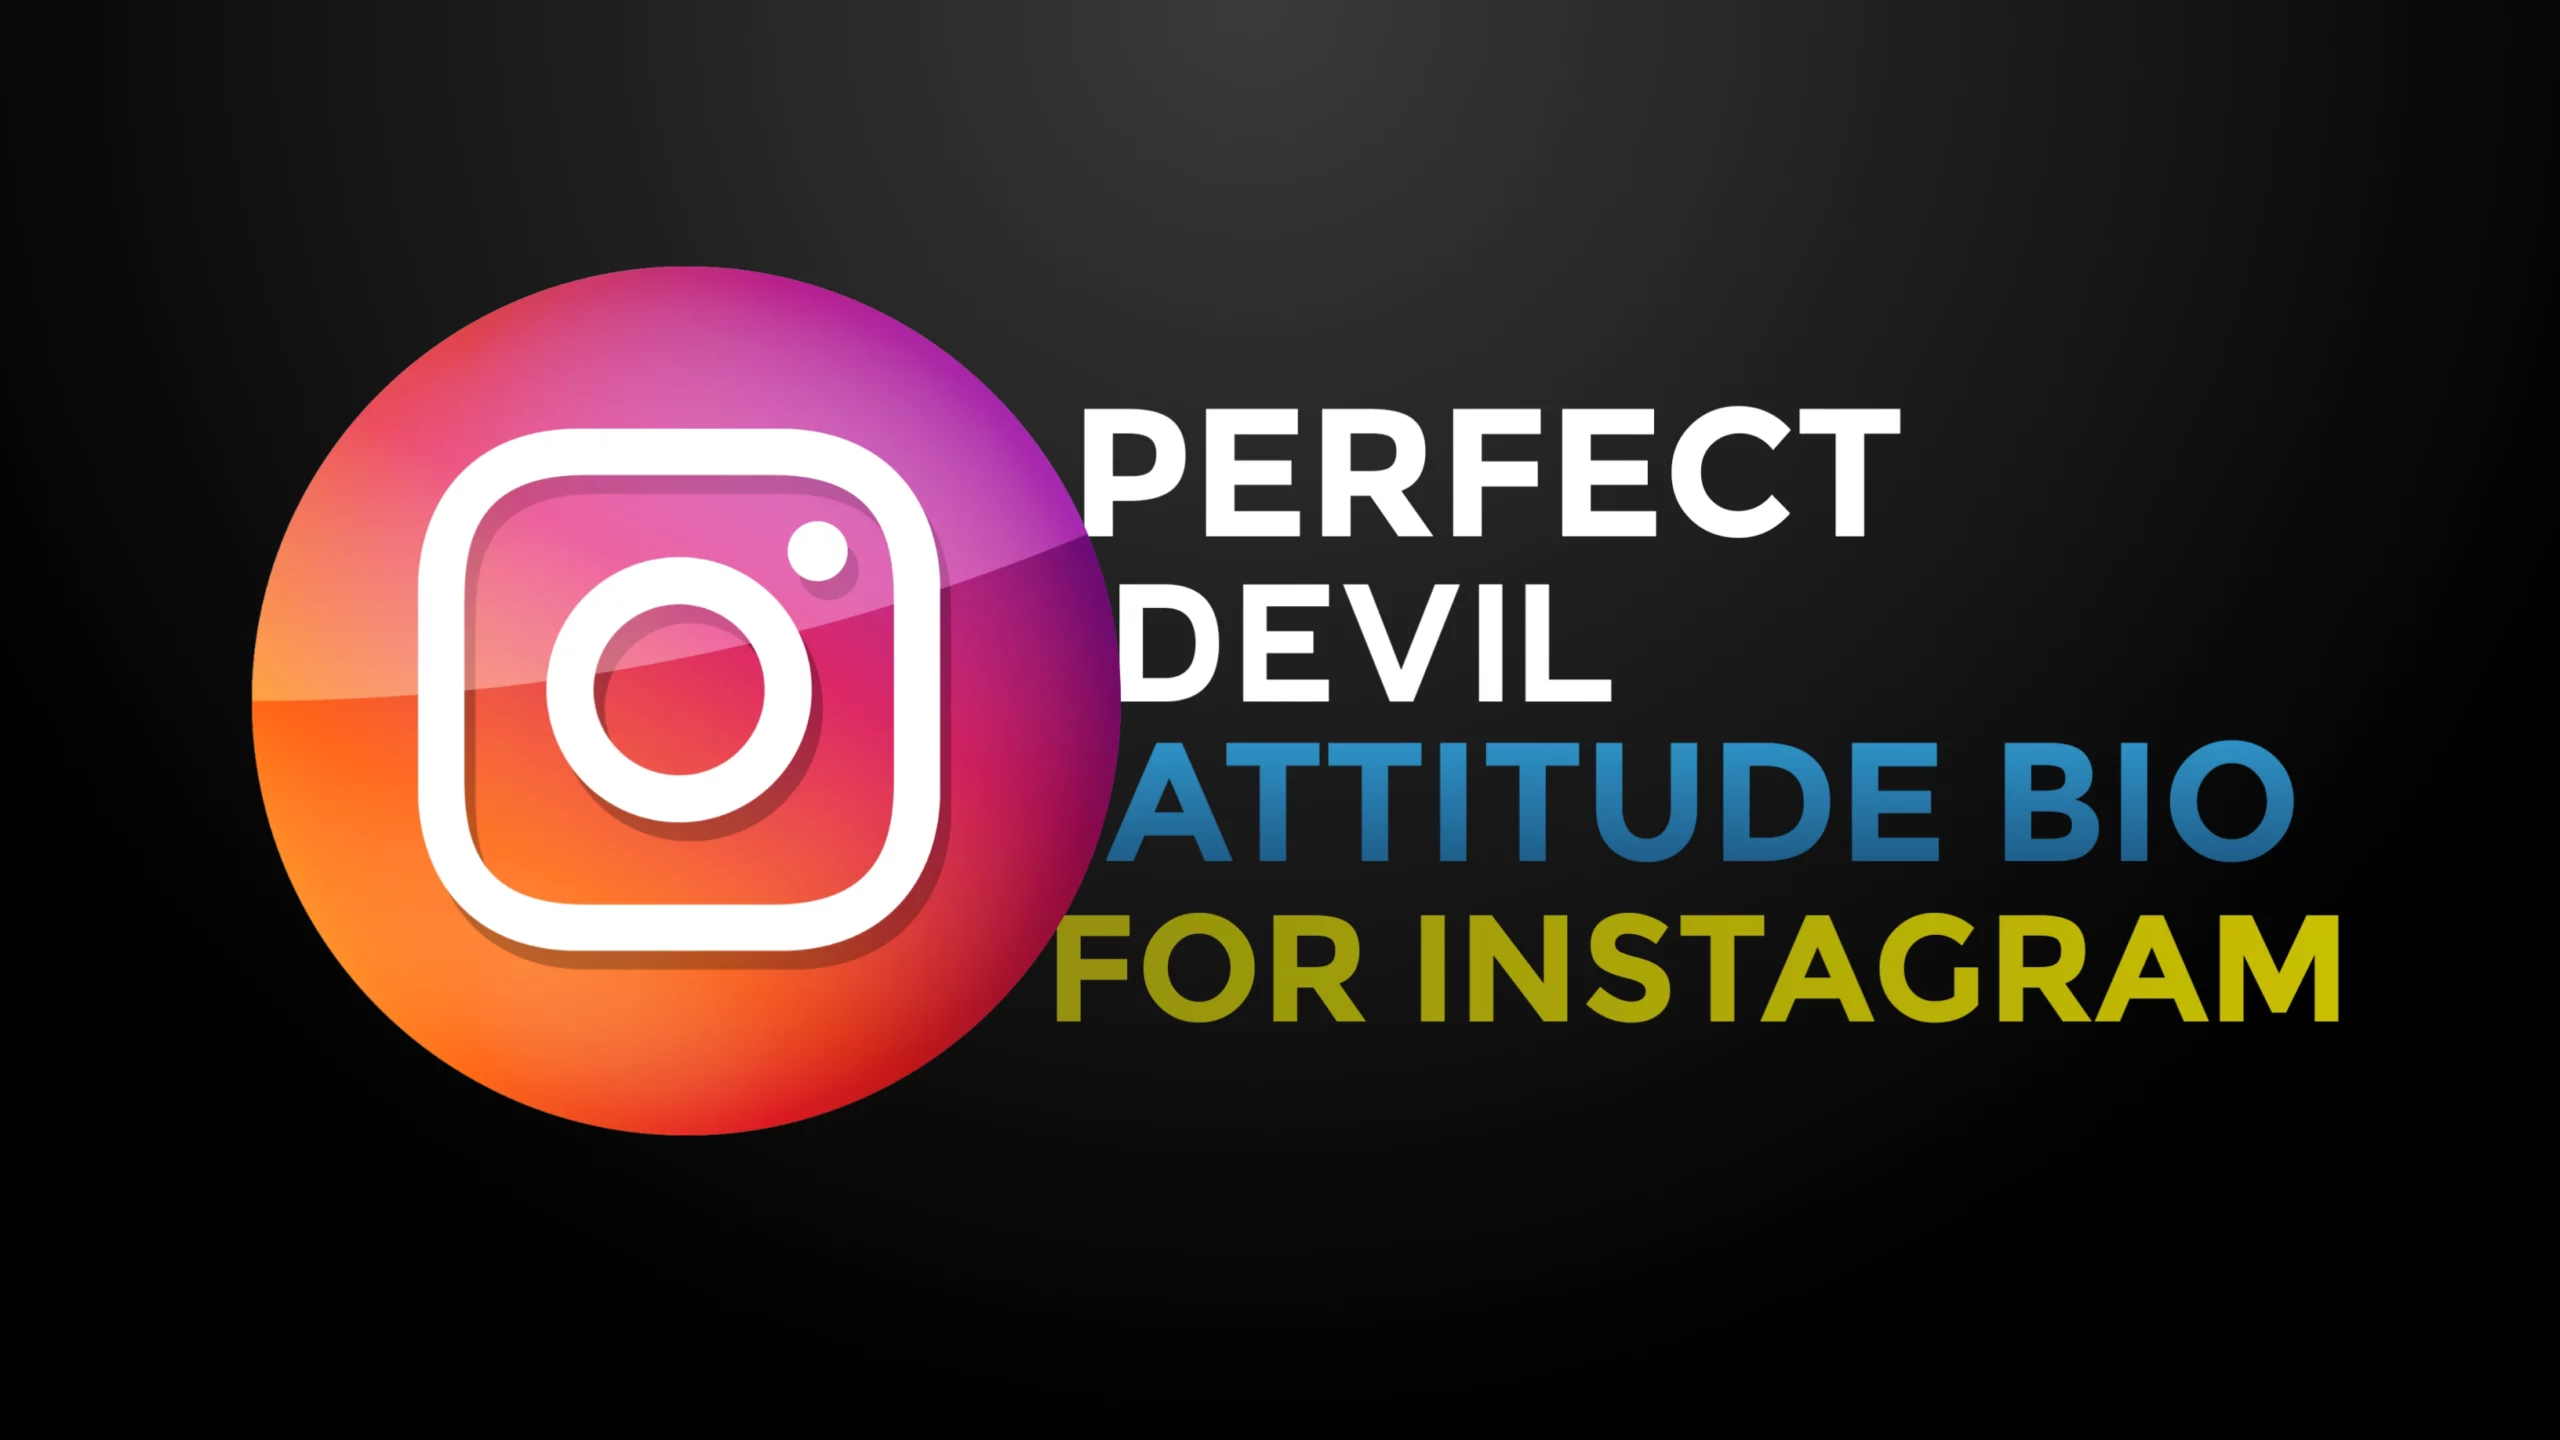 Devil Attitude Bio For Instagram for Boys & Girl in English